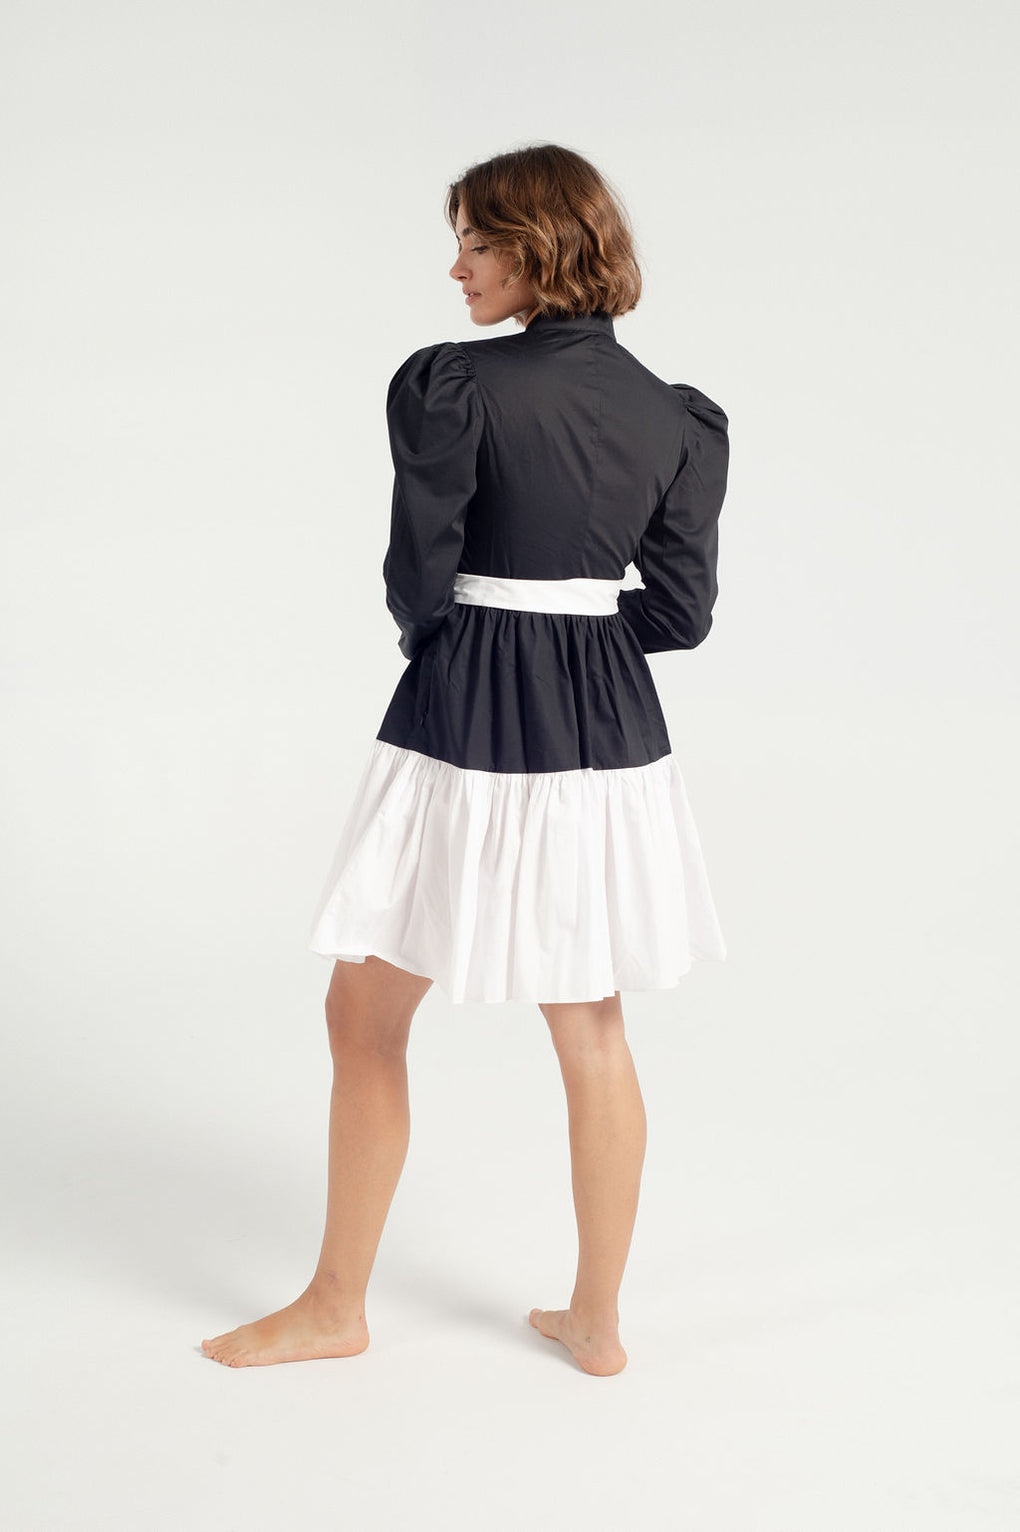 Batsheva-Long sleeve sadie dress-Batsheva black and white dress-Batsheva sadie dress-Idun-St. Paul